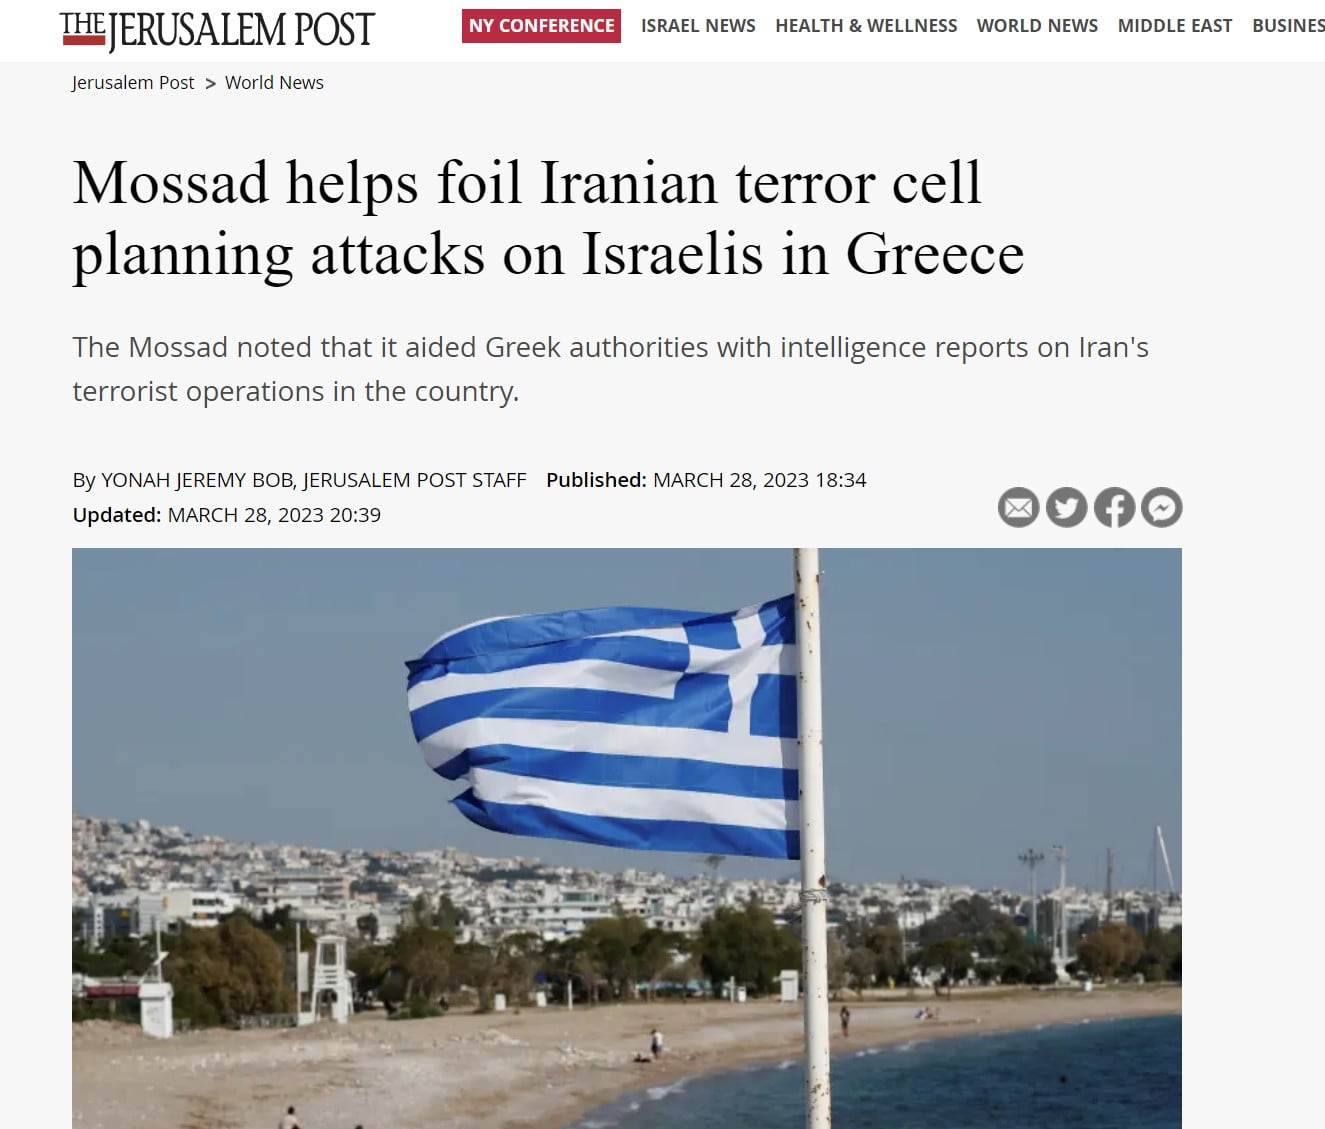 Jerusalem Post: Η Μοσάντ βοήθησε στην αποτροπή τρομοκρατικής επίθεσης του Ιράν εναντίον Ισραηλινών στην Ελλάδα